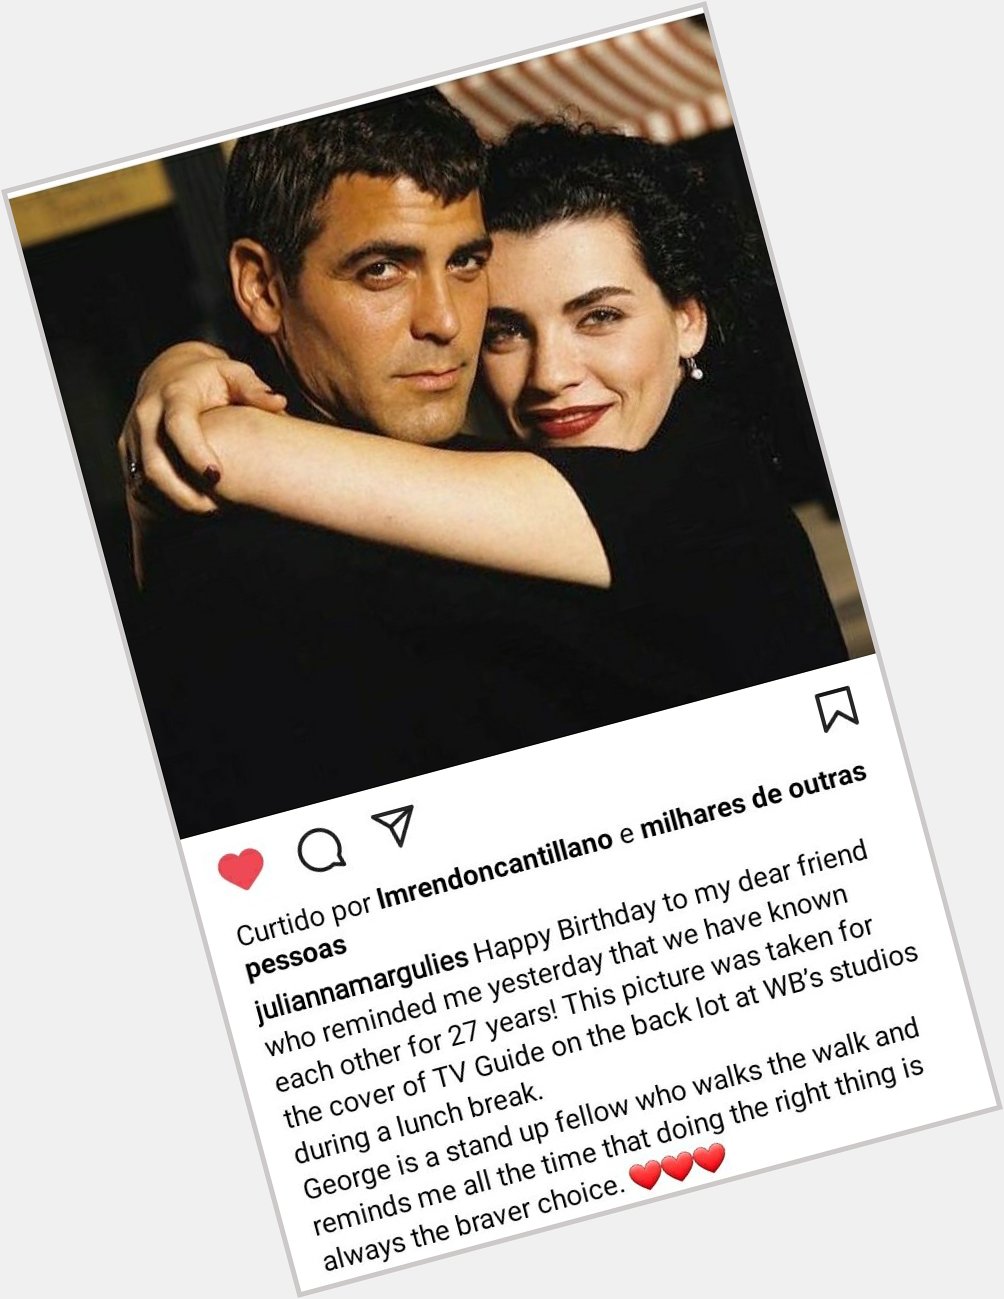 Happy birthday George Clooney  via Julianna Margulies Instagram 